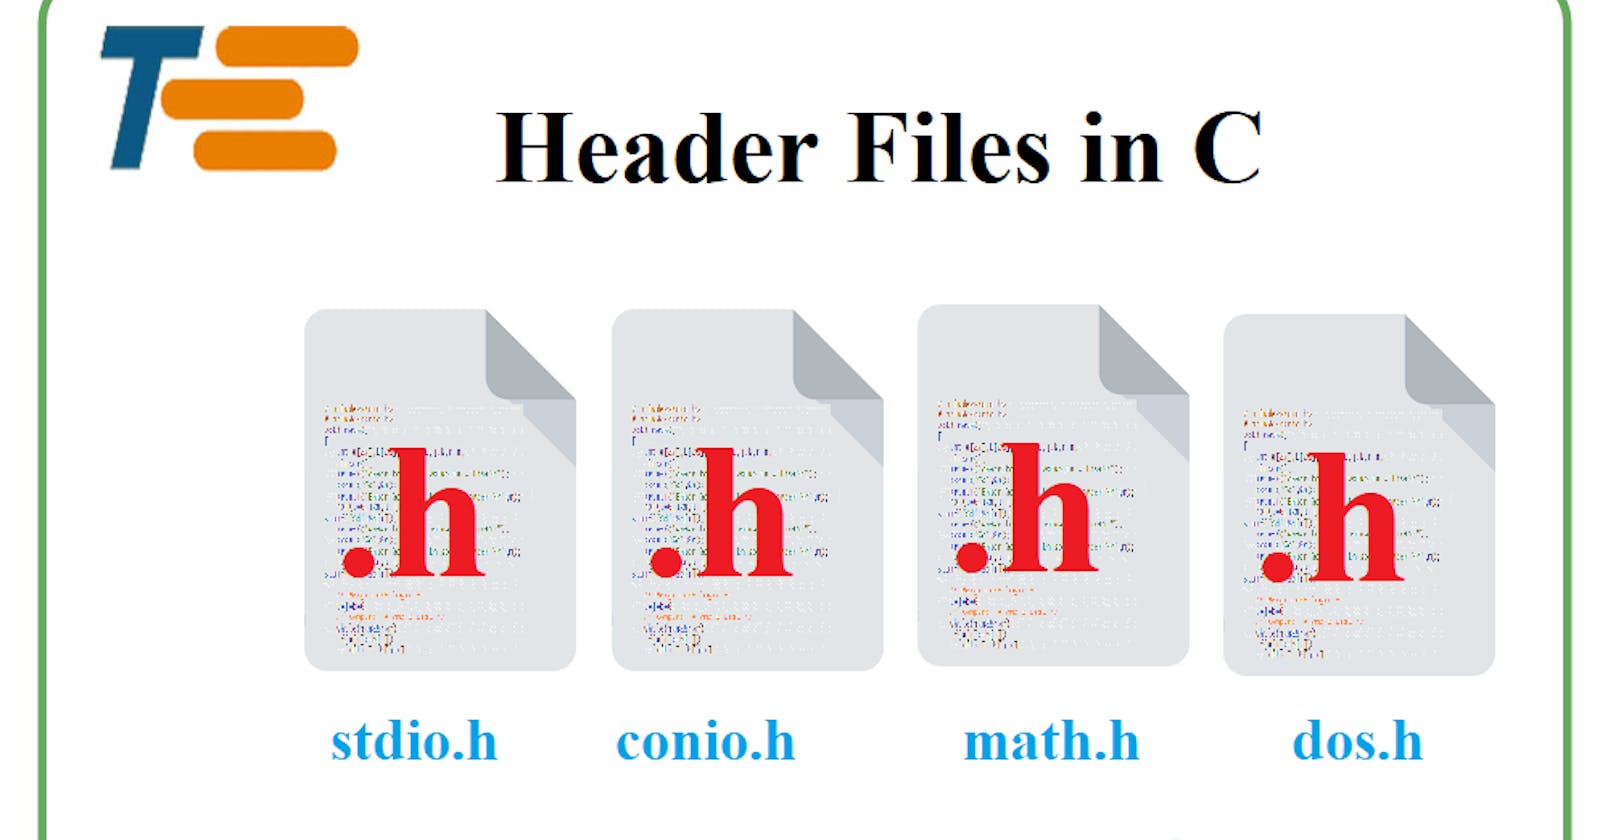 Header files in C